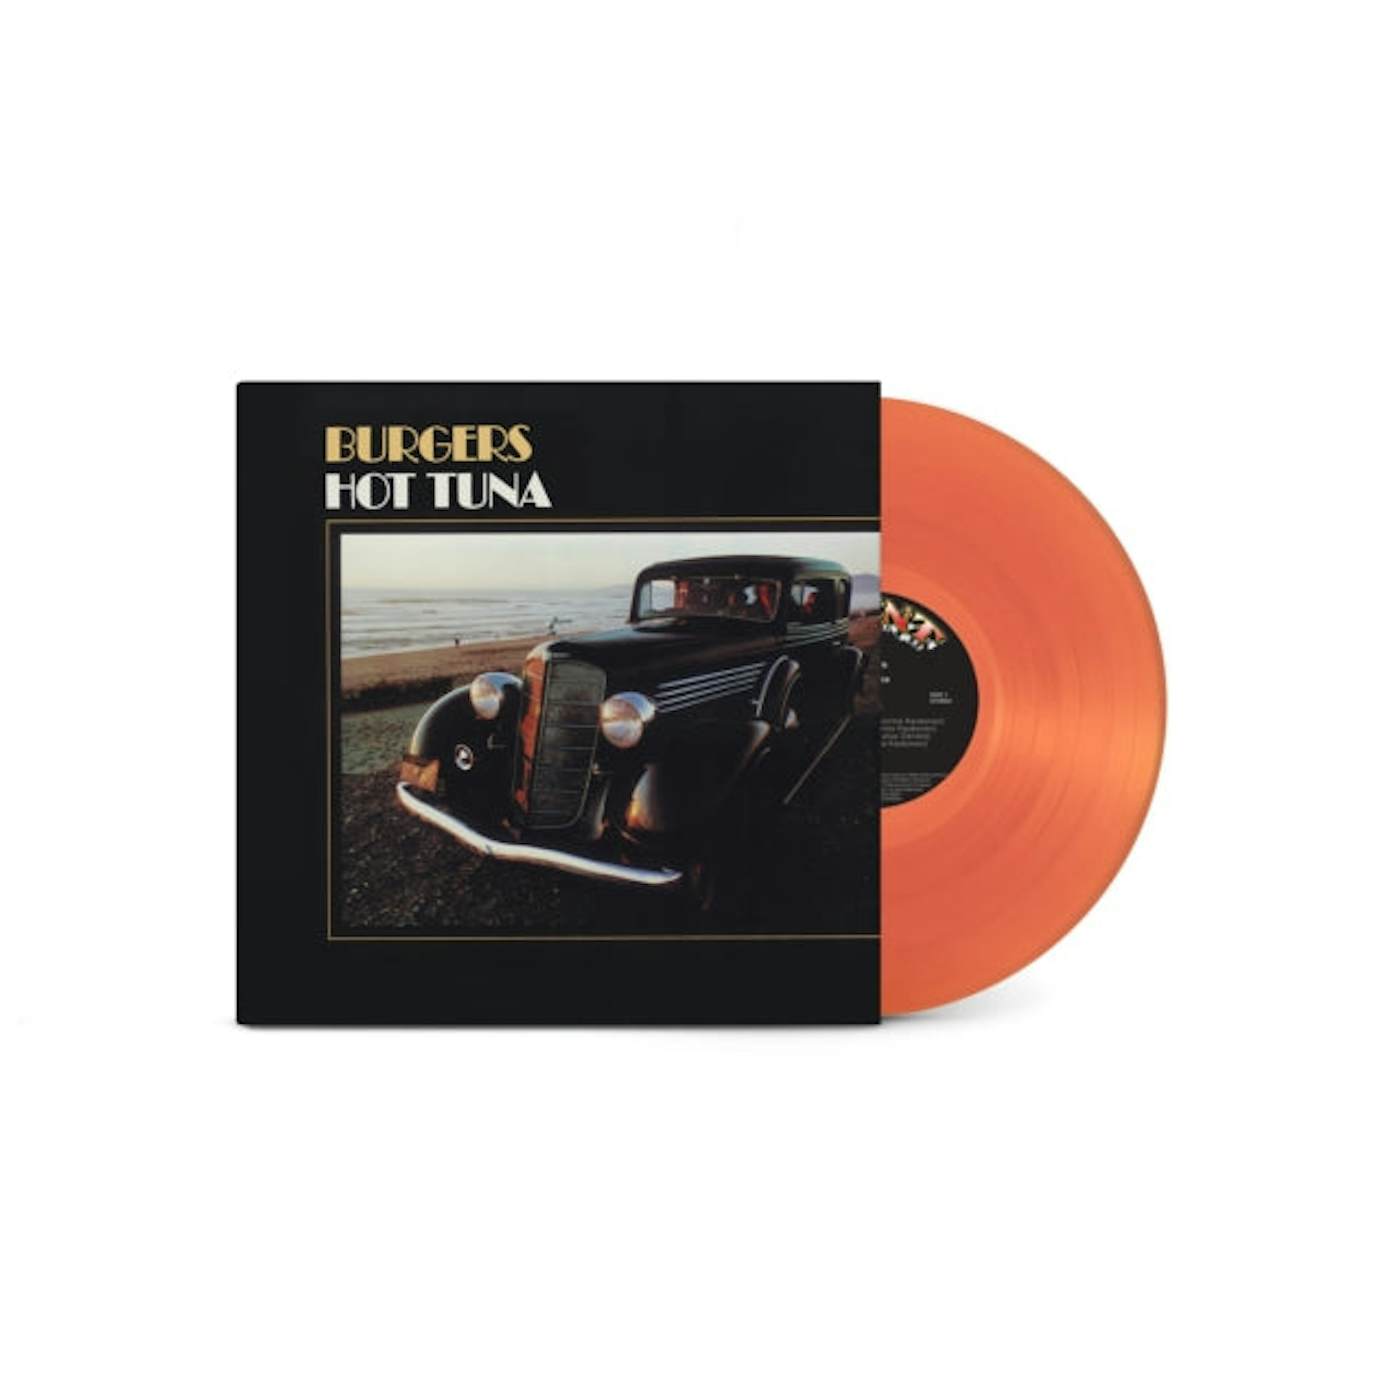 Hot Tuna LP Vinyl Record - Burgers (50th Anniversary) (Transparent Orange Vinyl) (Syeor) (Indies)